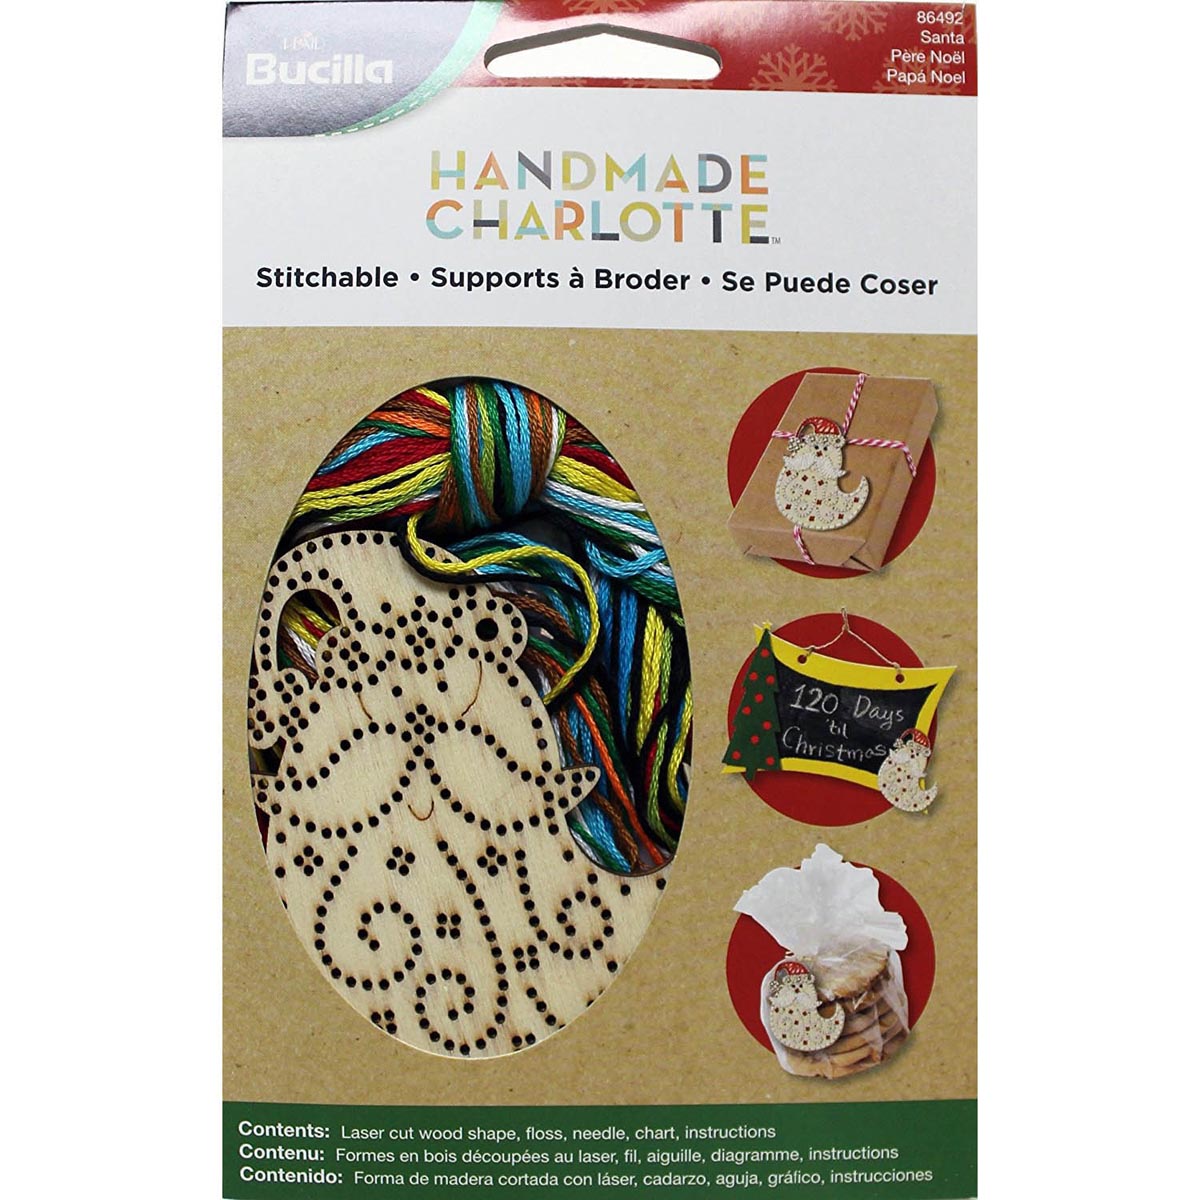 Bucilla ® Seasonal Handmade Charlotte™ Wood Stitchables - Santa - 86492